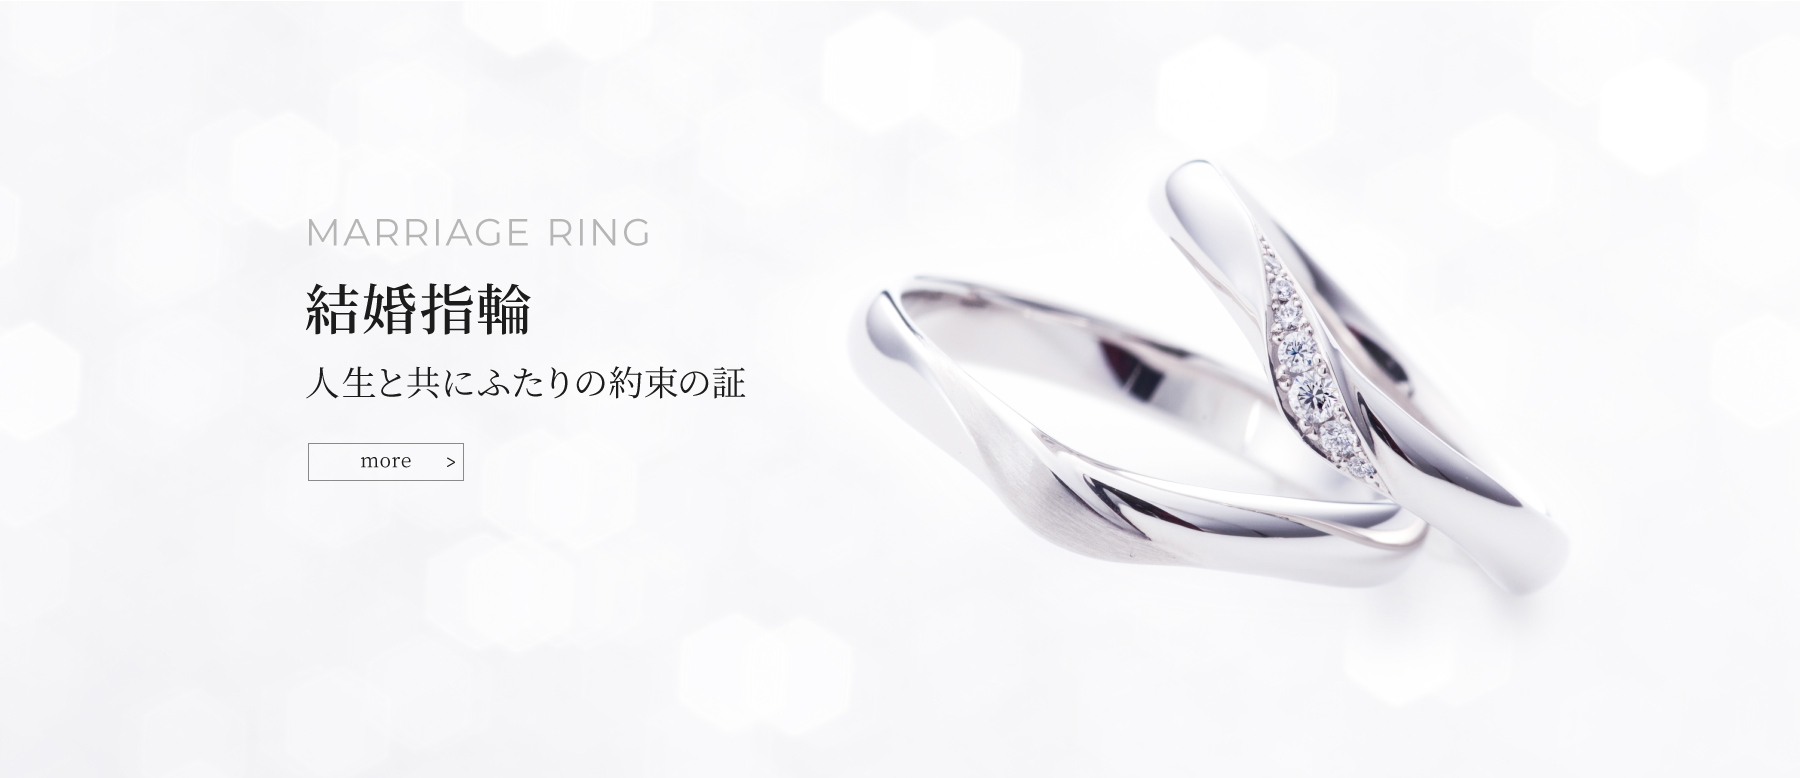 MARRIAGE RING 結婚指輪 人生と共にふたりの約束の証